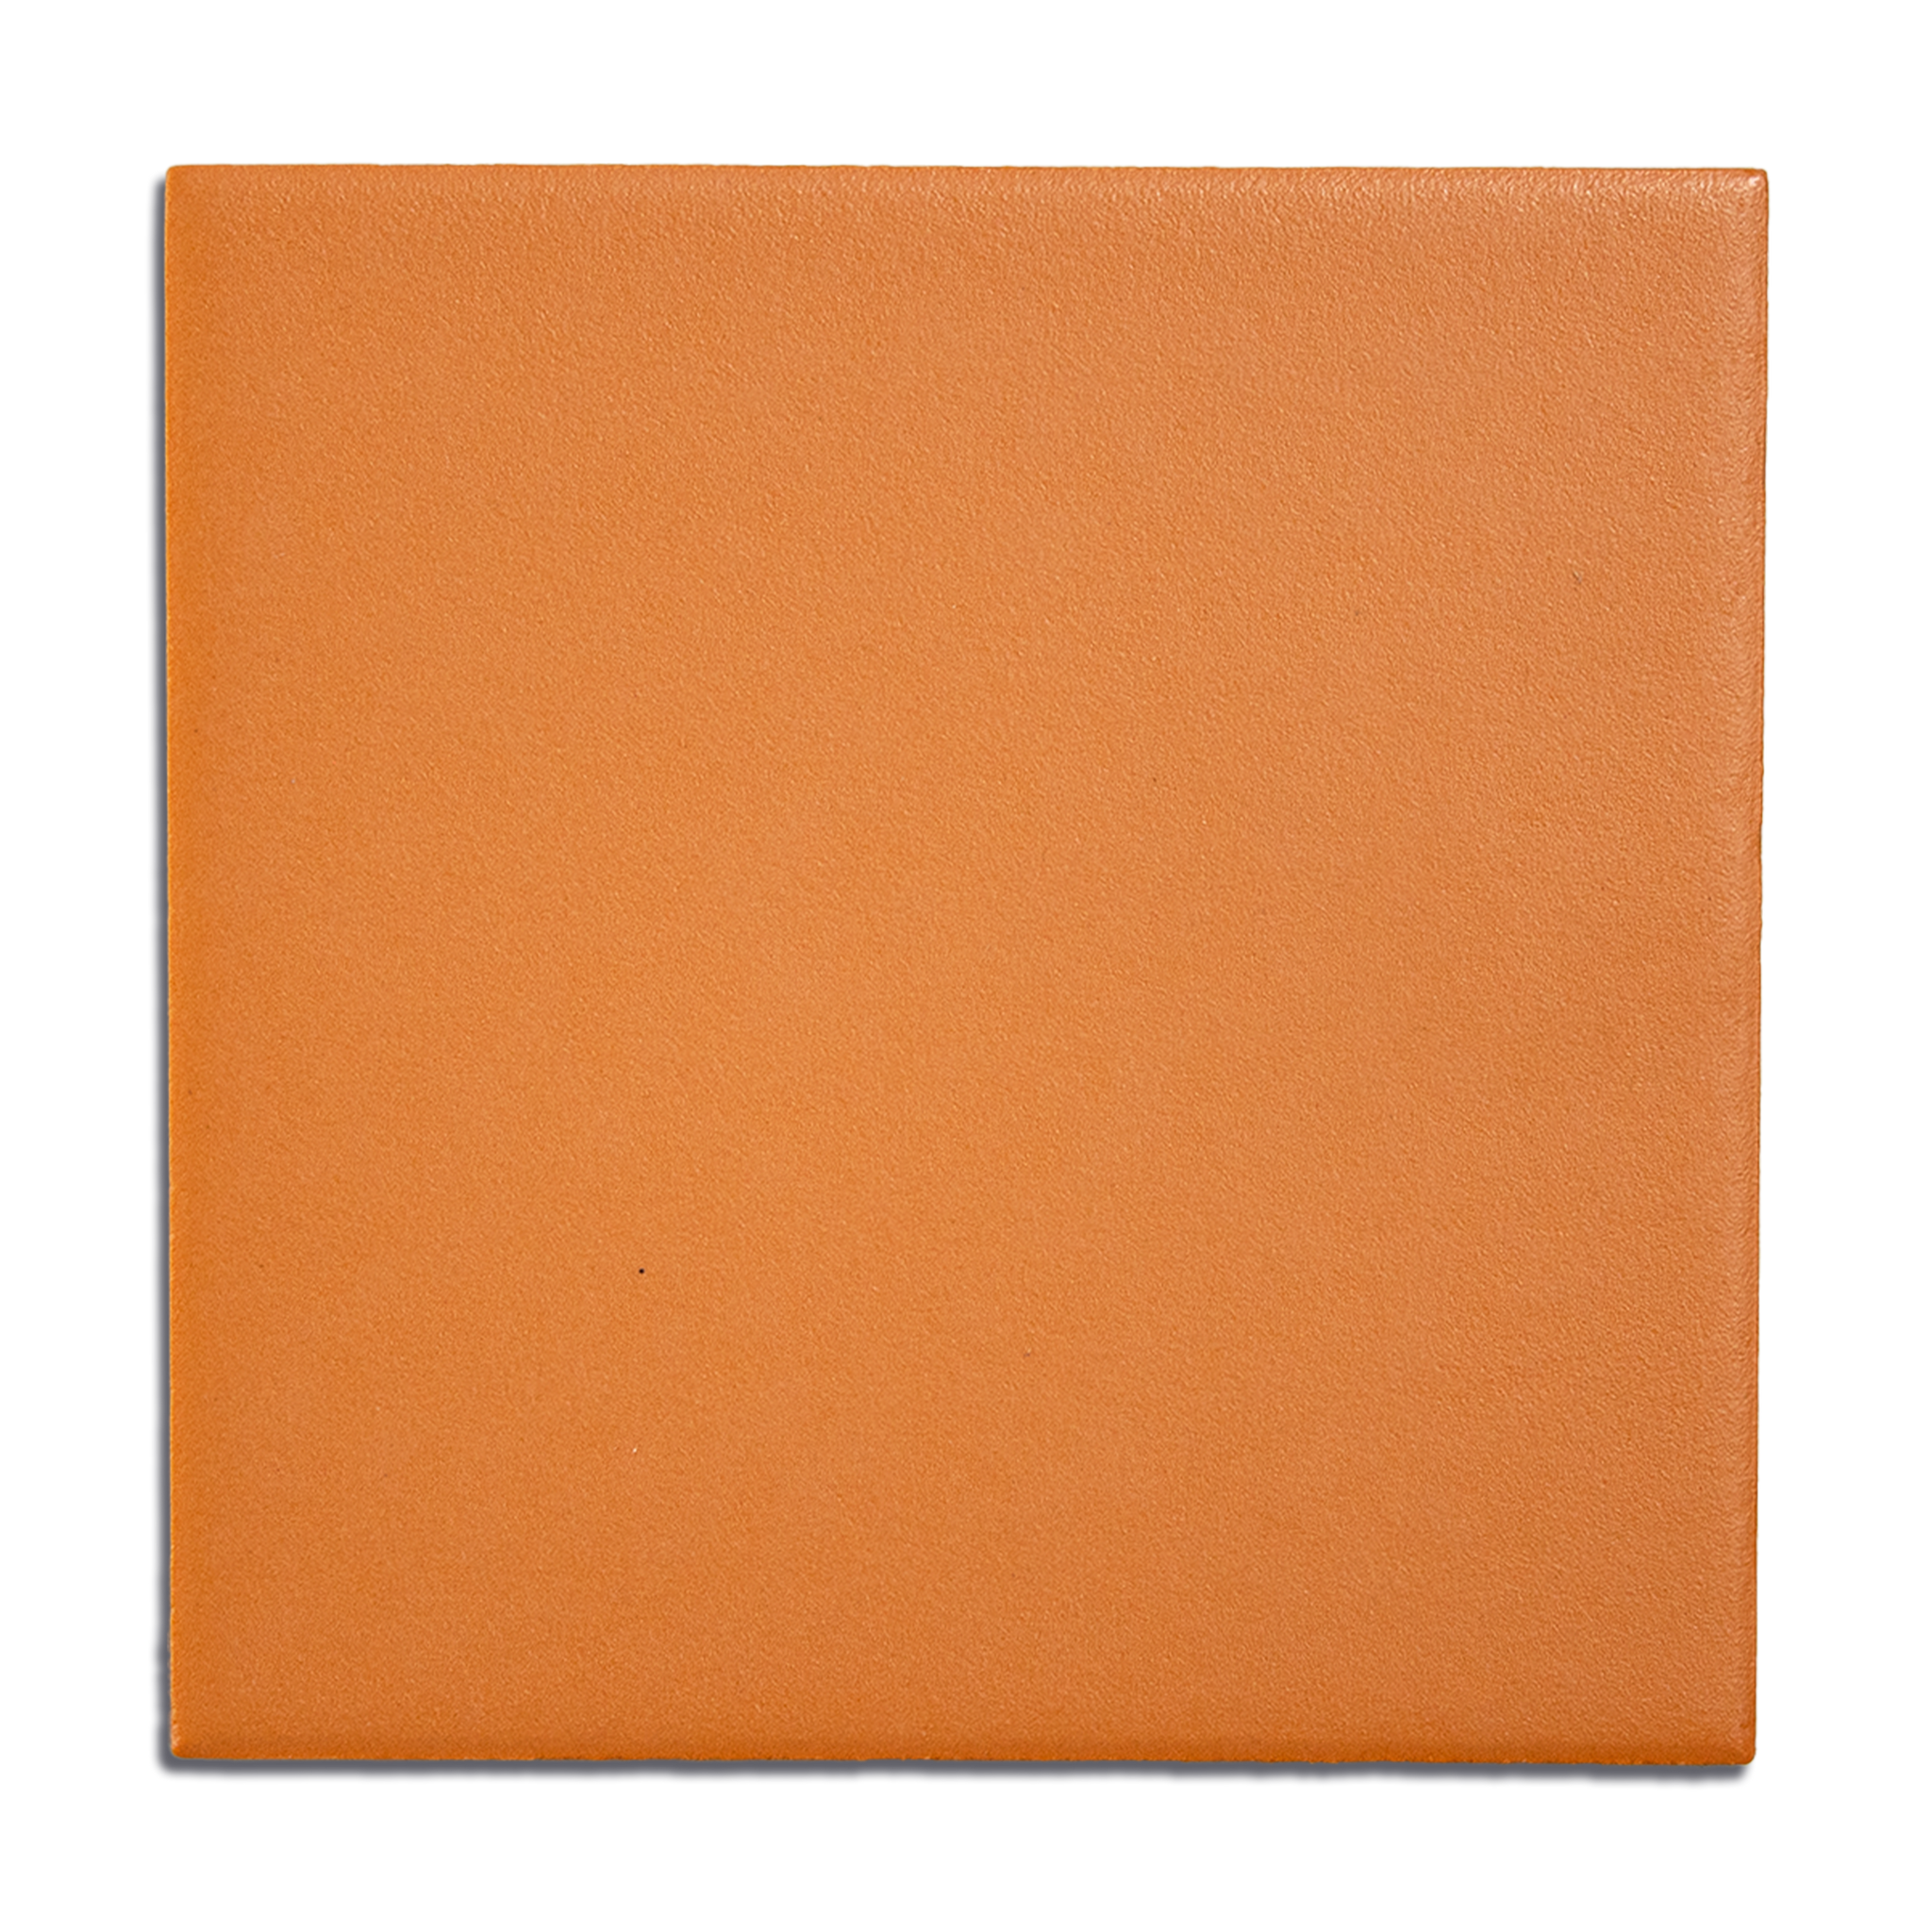 Trucco Square Apricot 5.5x5.5 Full Body Porcelain Tile